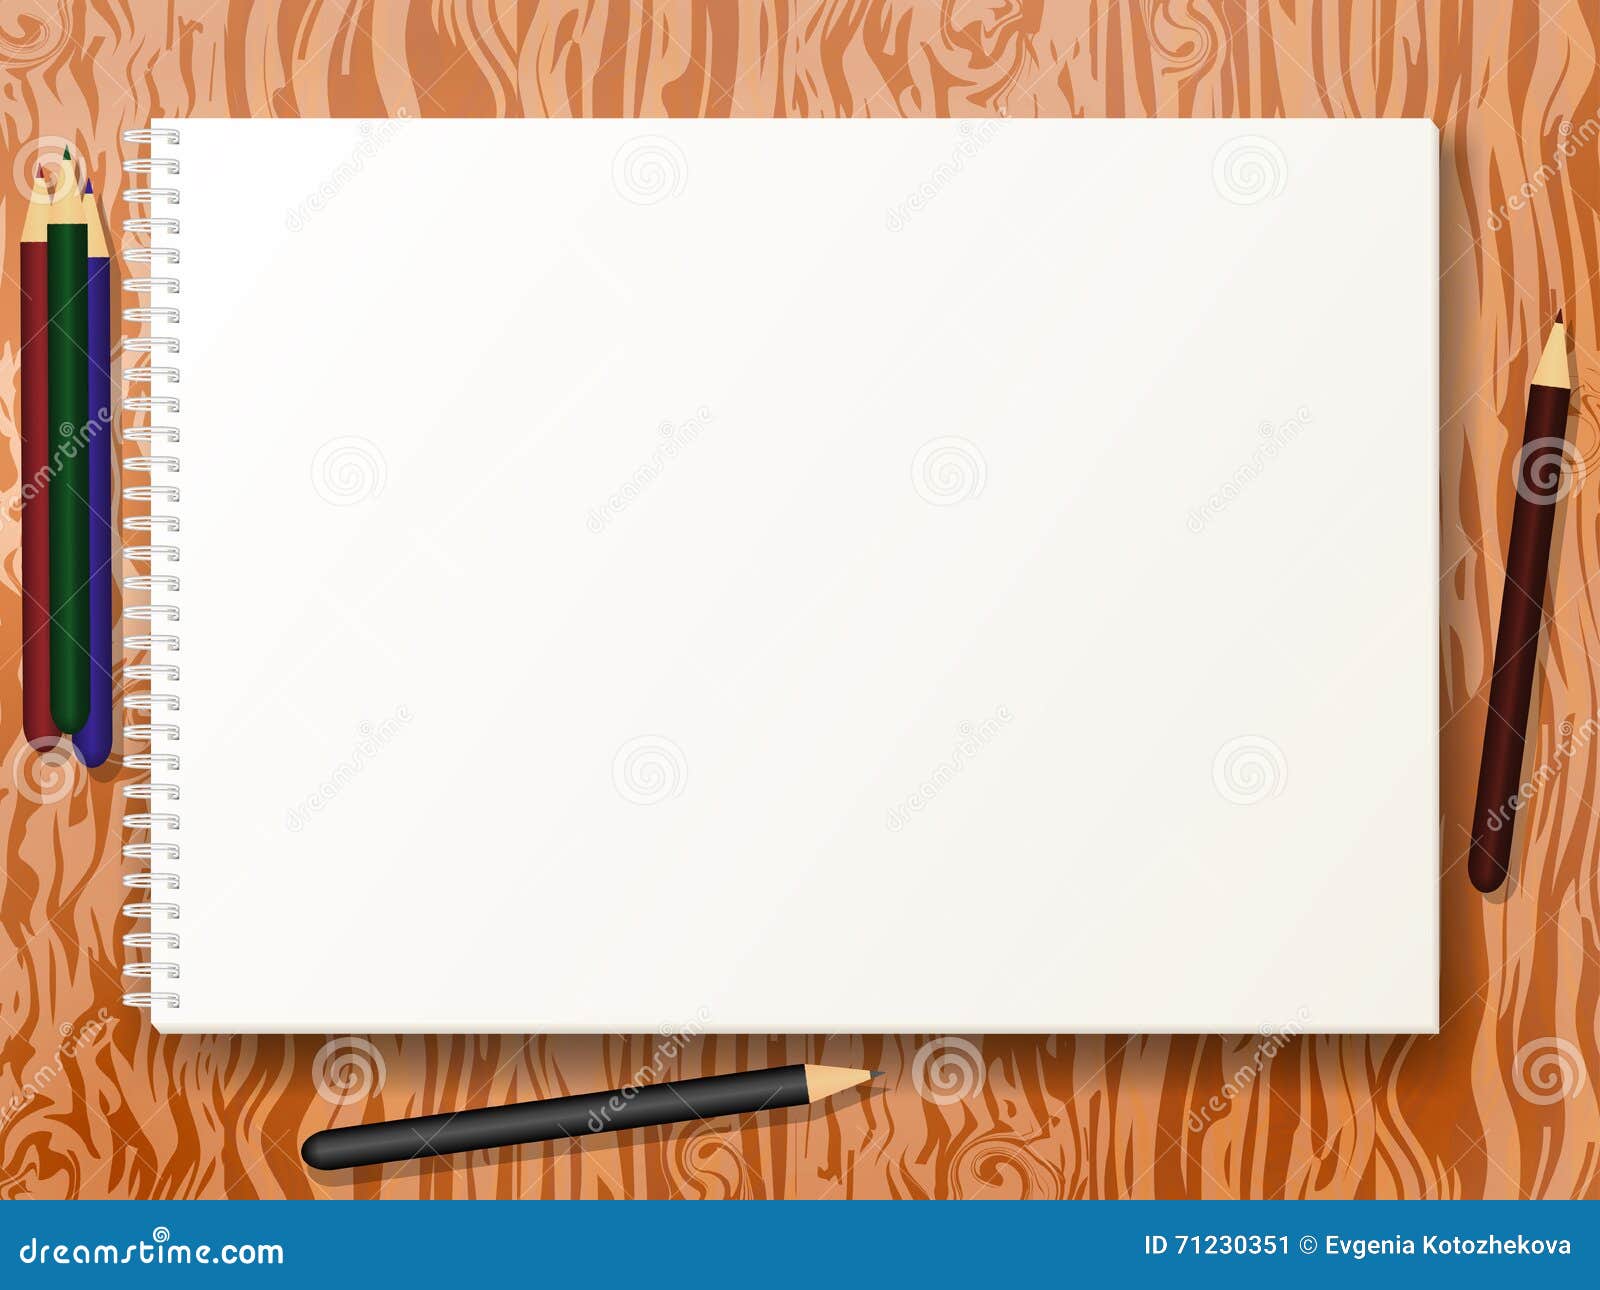 Vector Illustration Sketch Pad With Pencils Stock Vector 